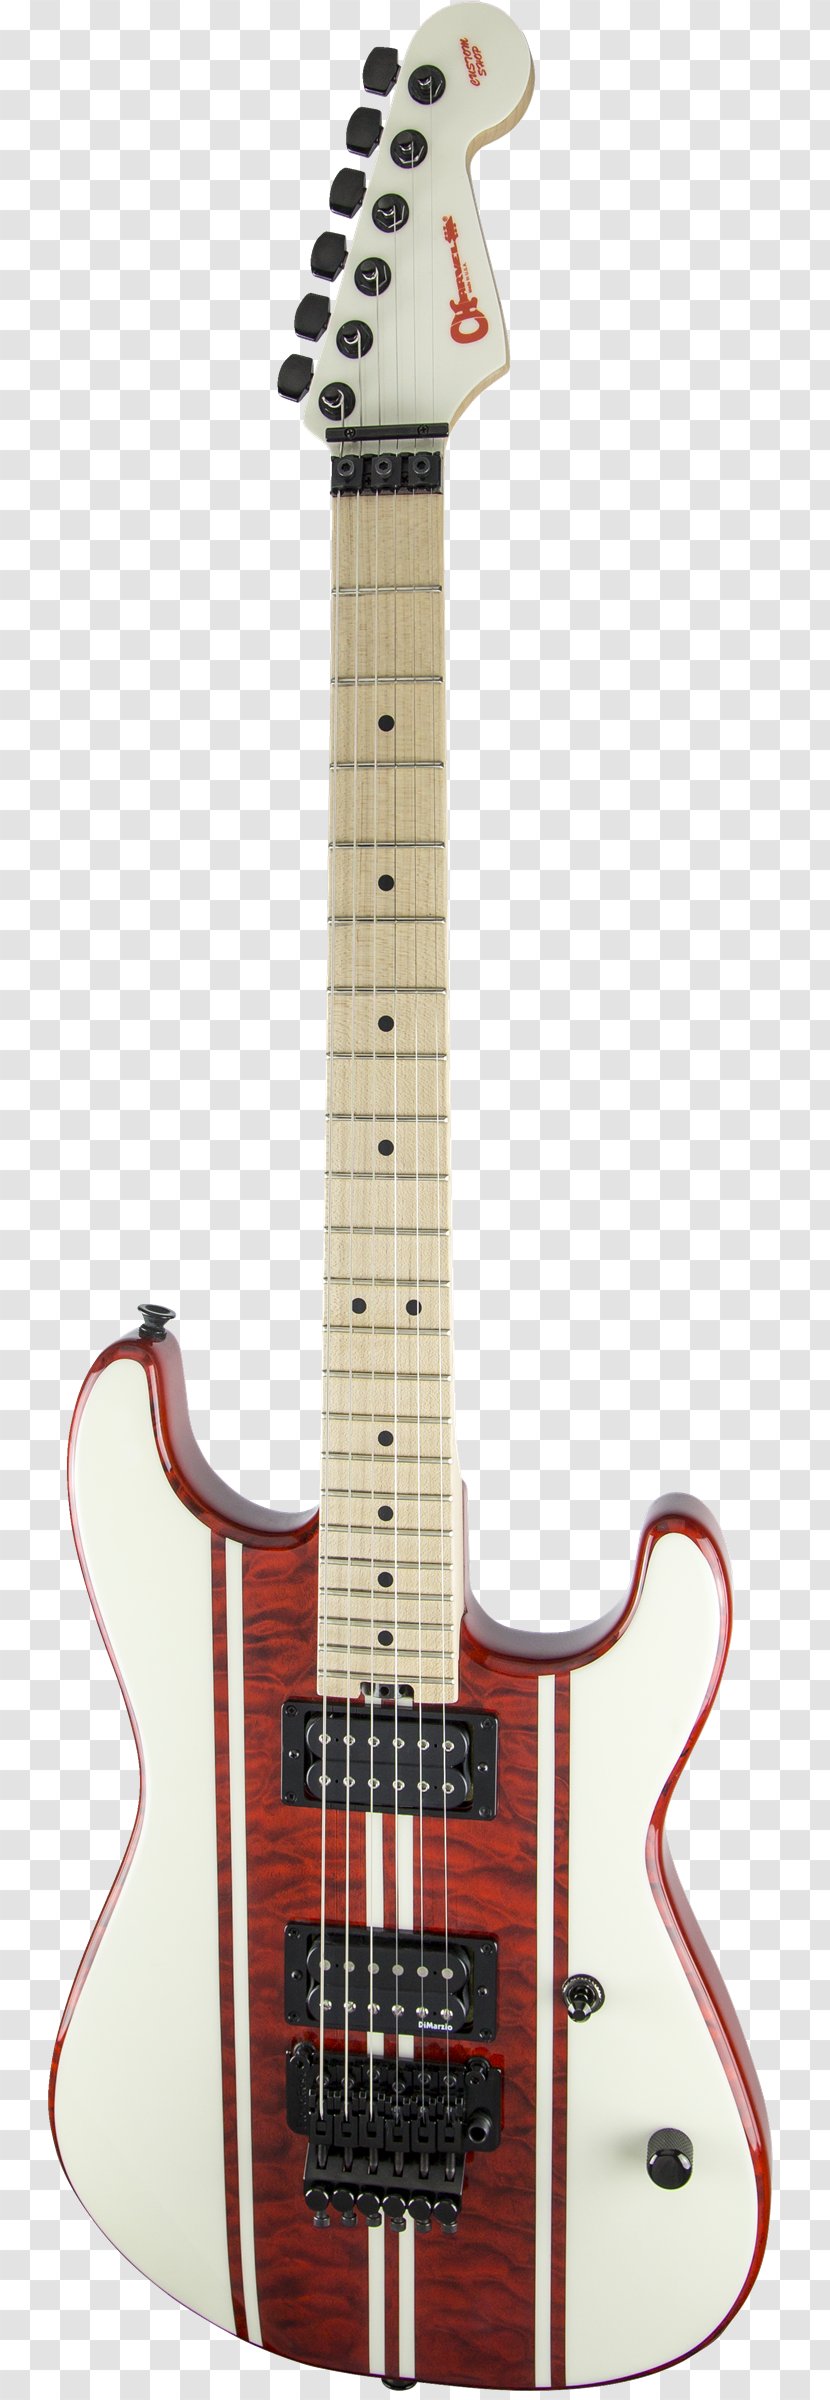 Bass Guitar Electric Acoustic Fender Musical Instruments Corporation Stratocaster - Telecaster - Volume Knob Transparent PNG